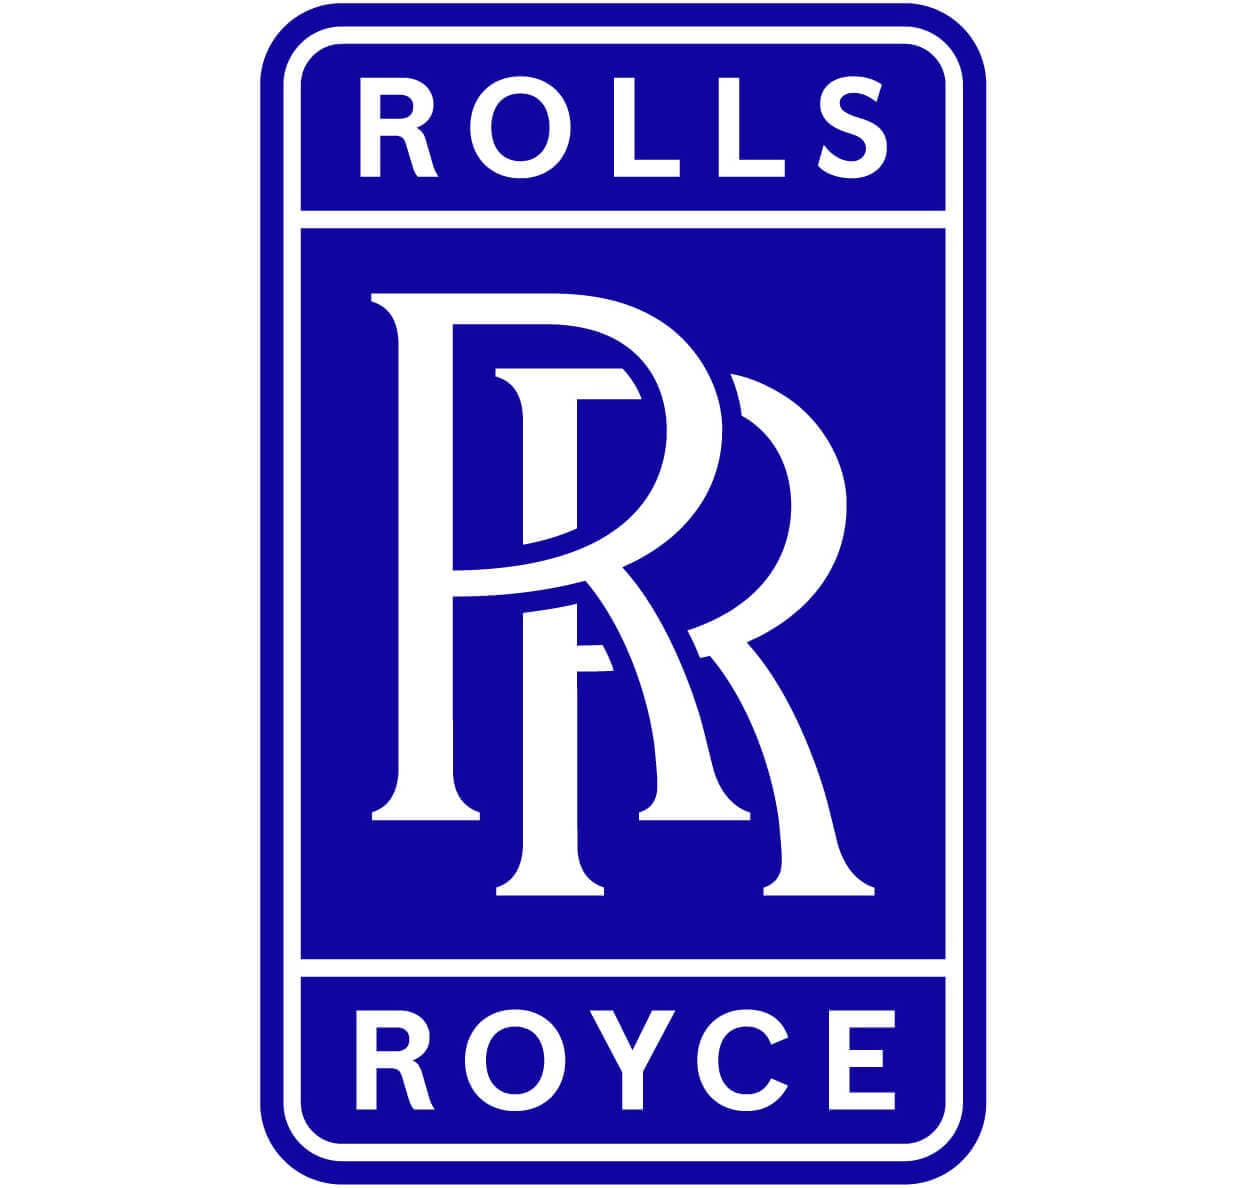 Rolls Royce company logo